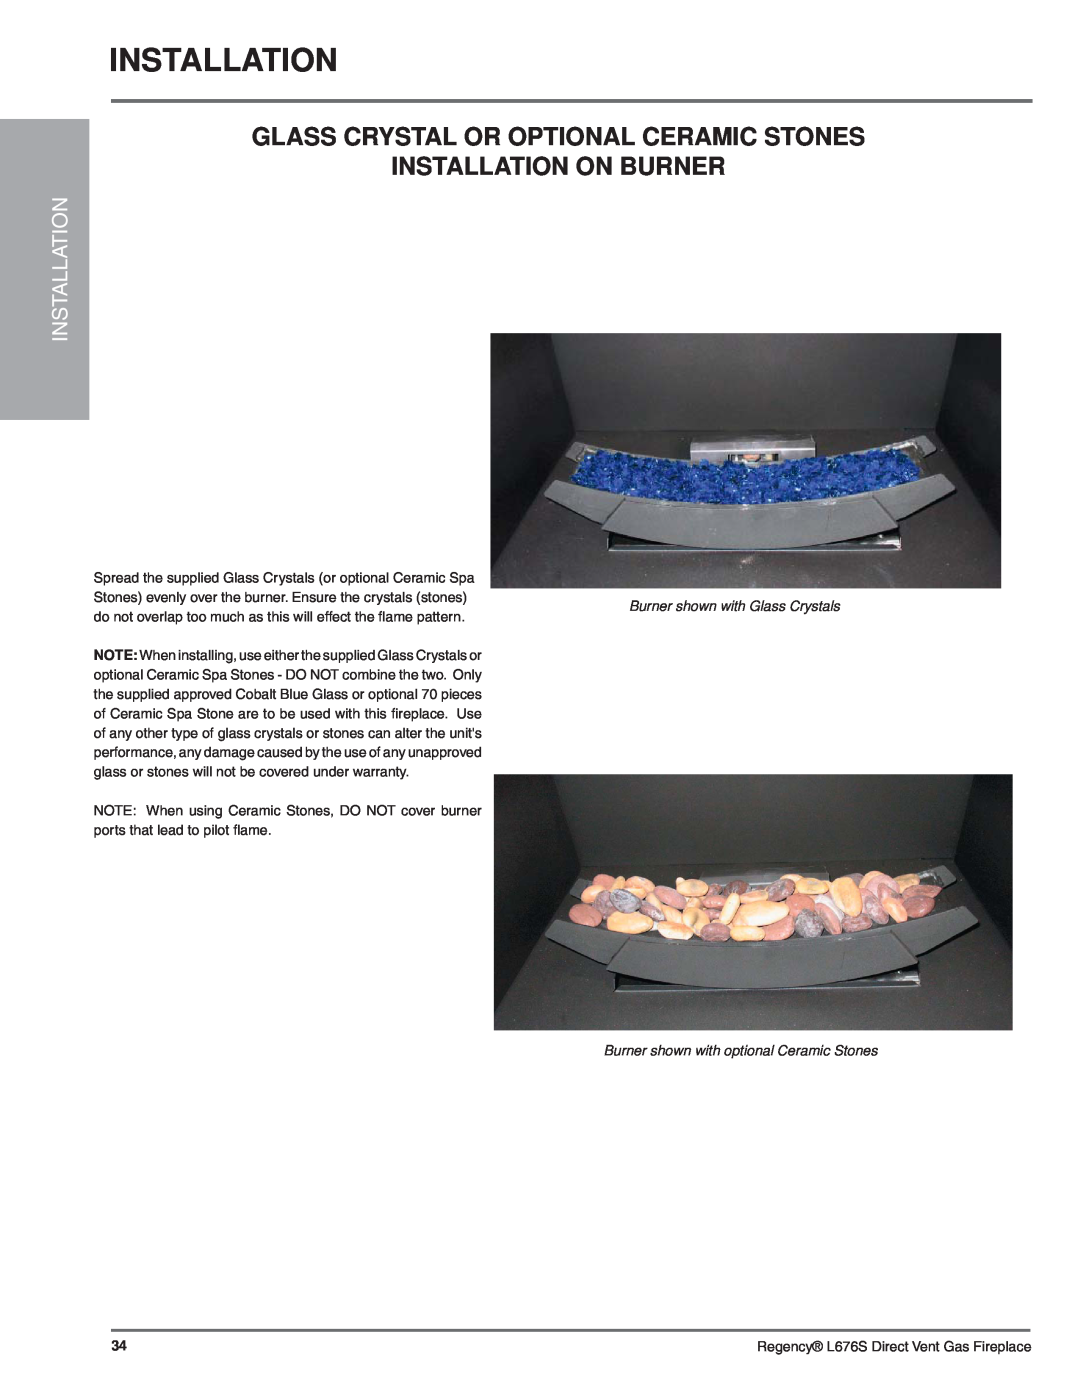 Regency L676S-NG1 Glass Crystal Or Optional Ceramic Stones, Installation On Burner, Burner shown with Glass Crystals 